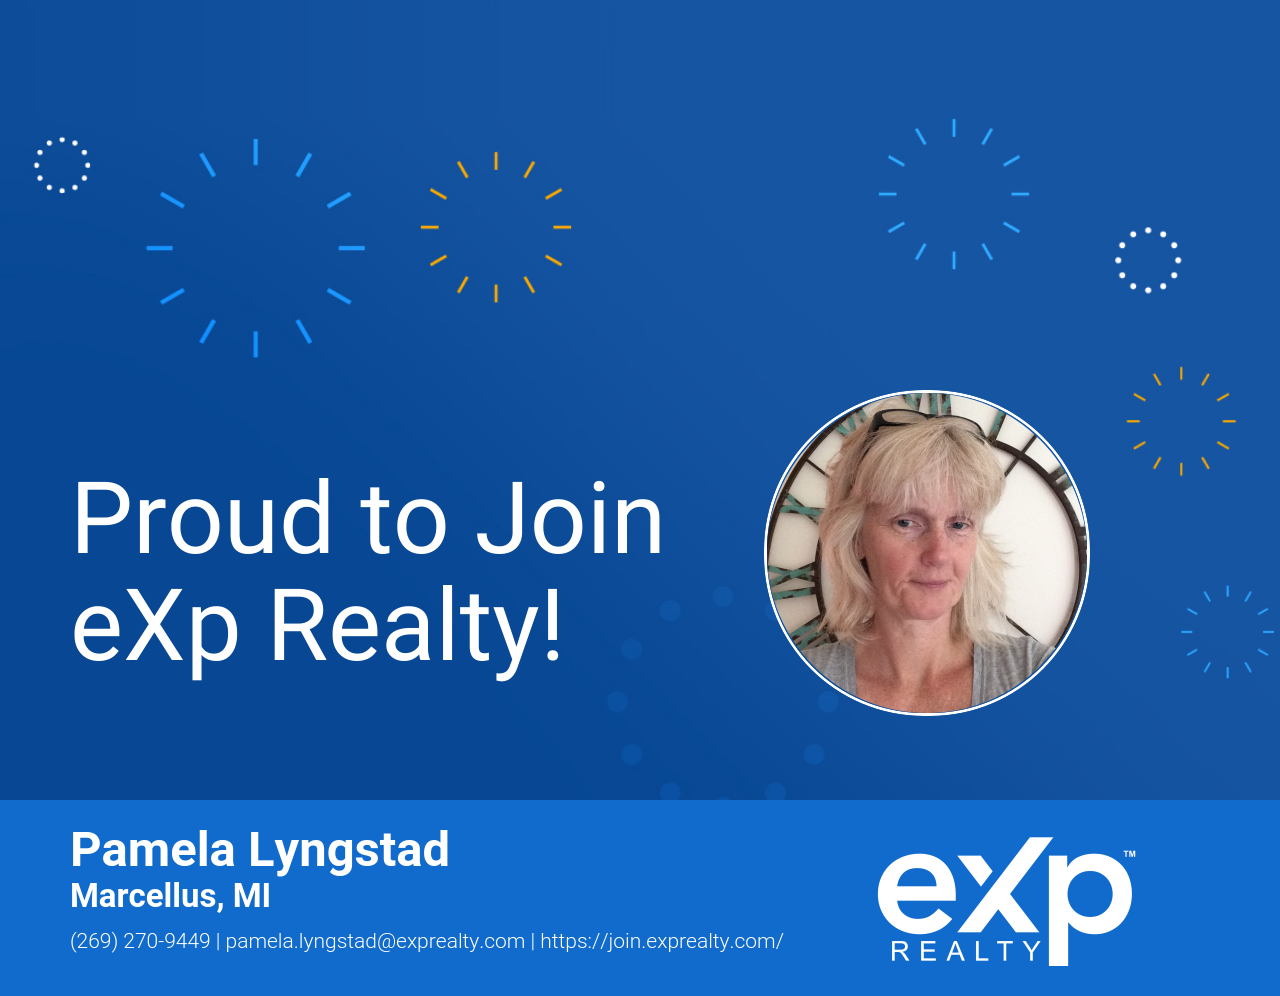 eXp Realty Welcomes Pamela Lyngstad!